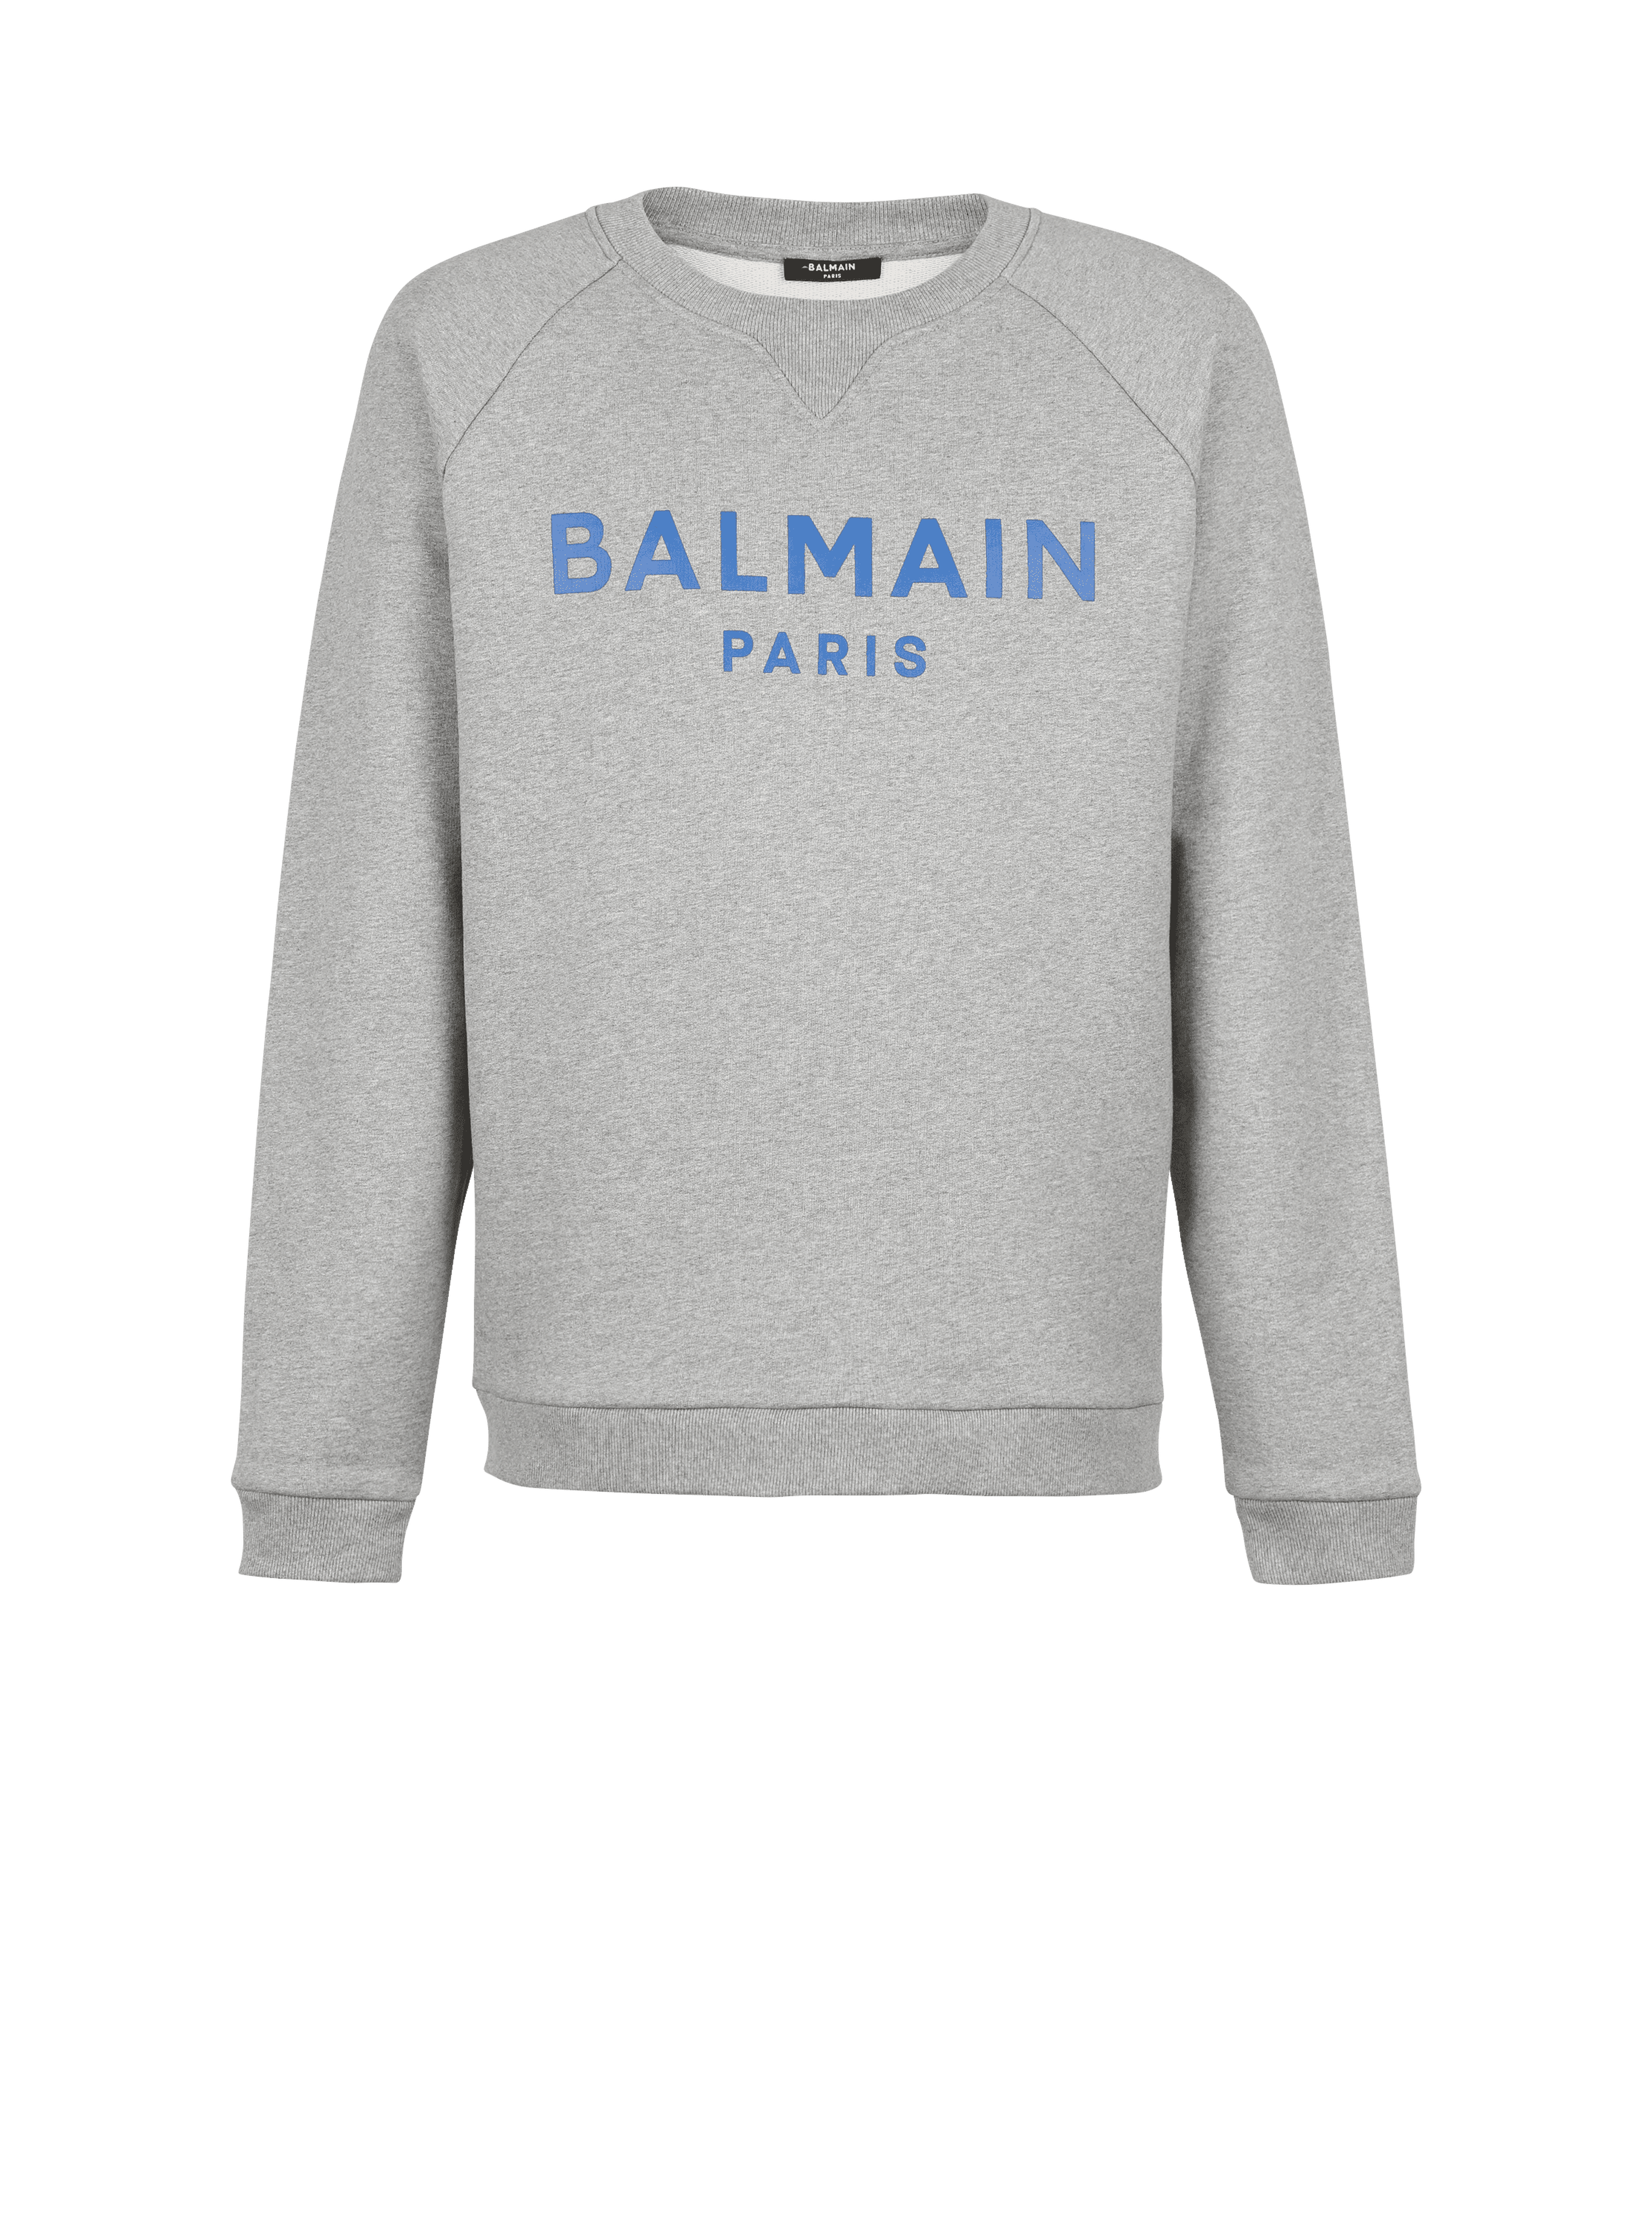 EXCLUSIVE - Cotton sweatshirt with Balmain Paris logo print, grey